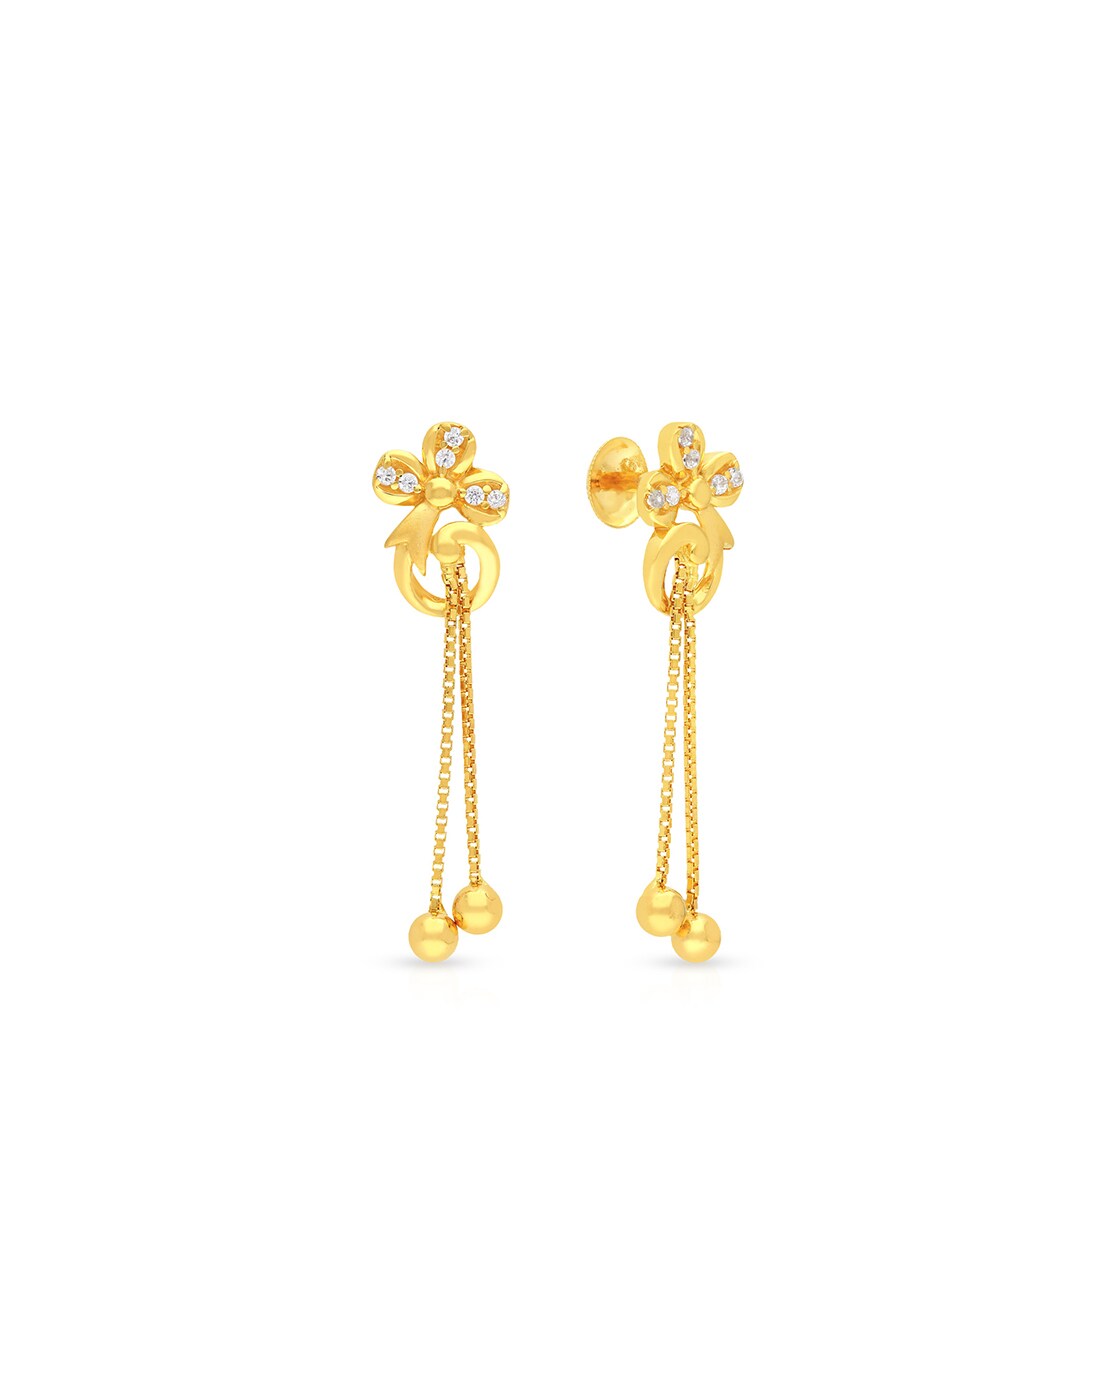 190 Earrings for daily wear ideas in 2023  gold earrings designs gold  jewelry fashion gold jewellery design